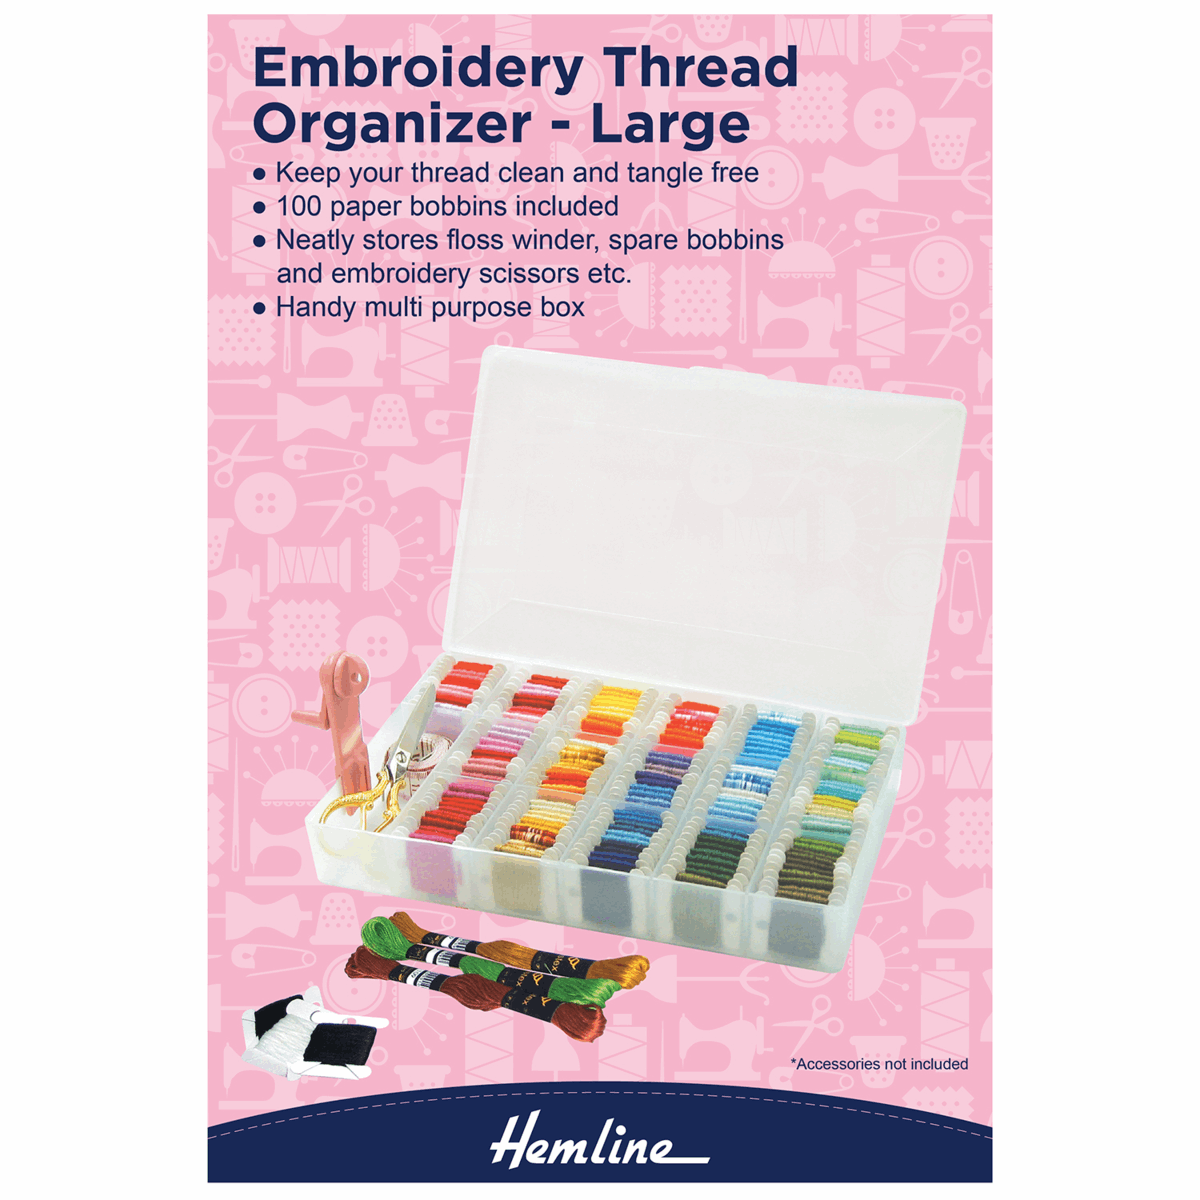 Embroidery Thread Organiser - Large by Hemline  